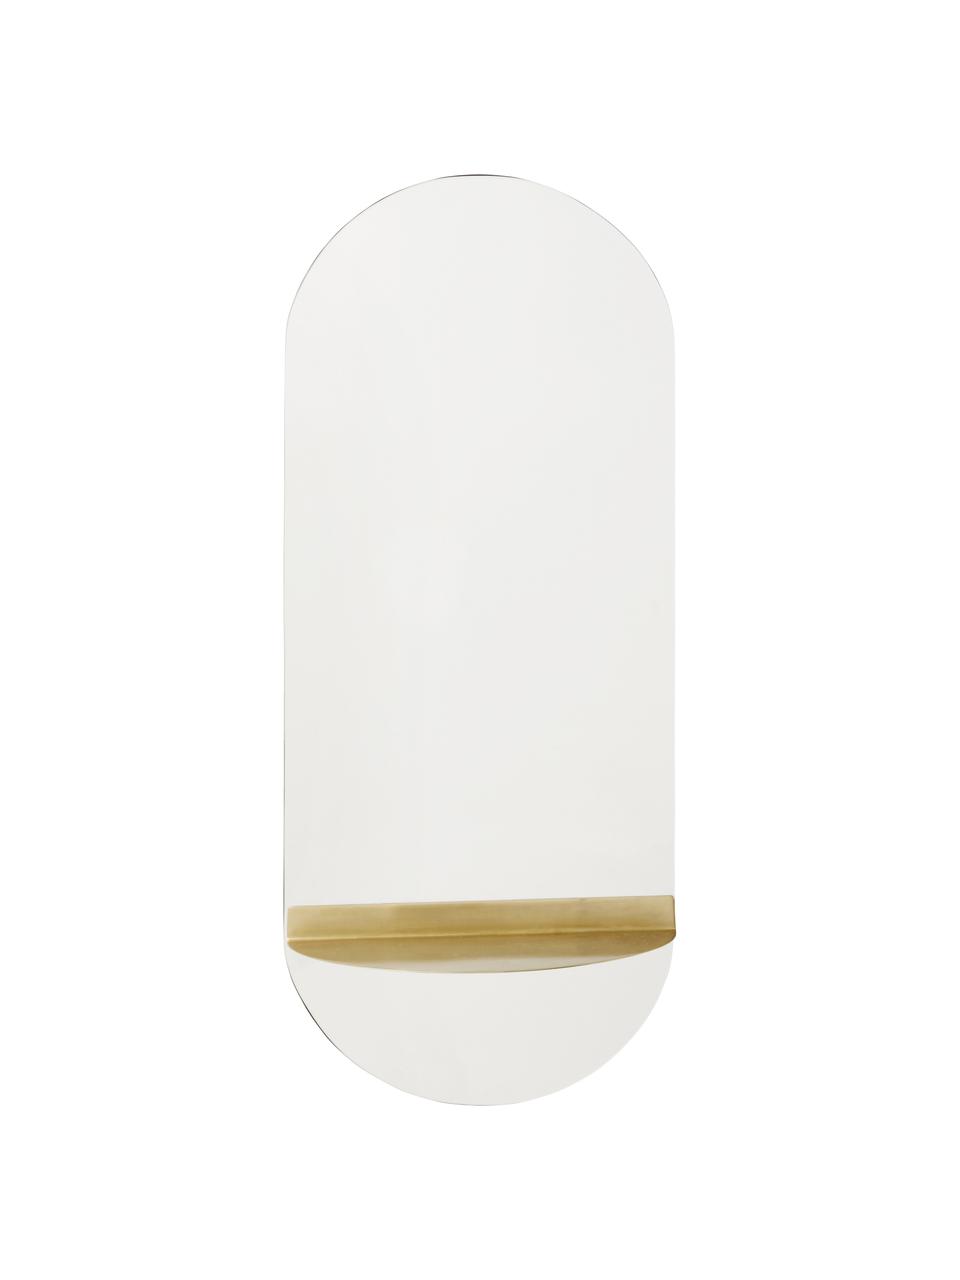 Ovale wandspiegel Dinnas met plank, Plank: gecoat metaal, Messingkleurig, 30 x 61 cm